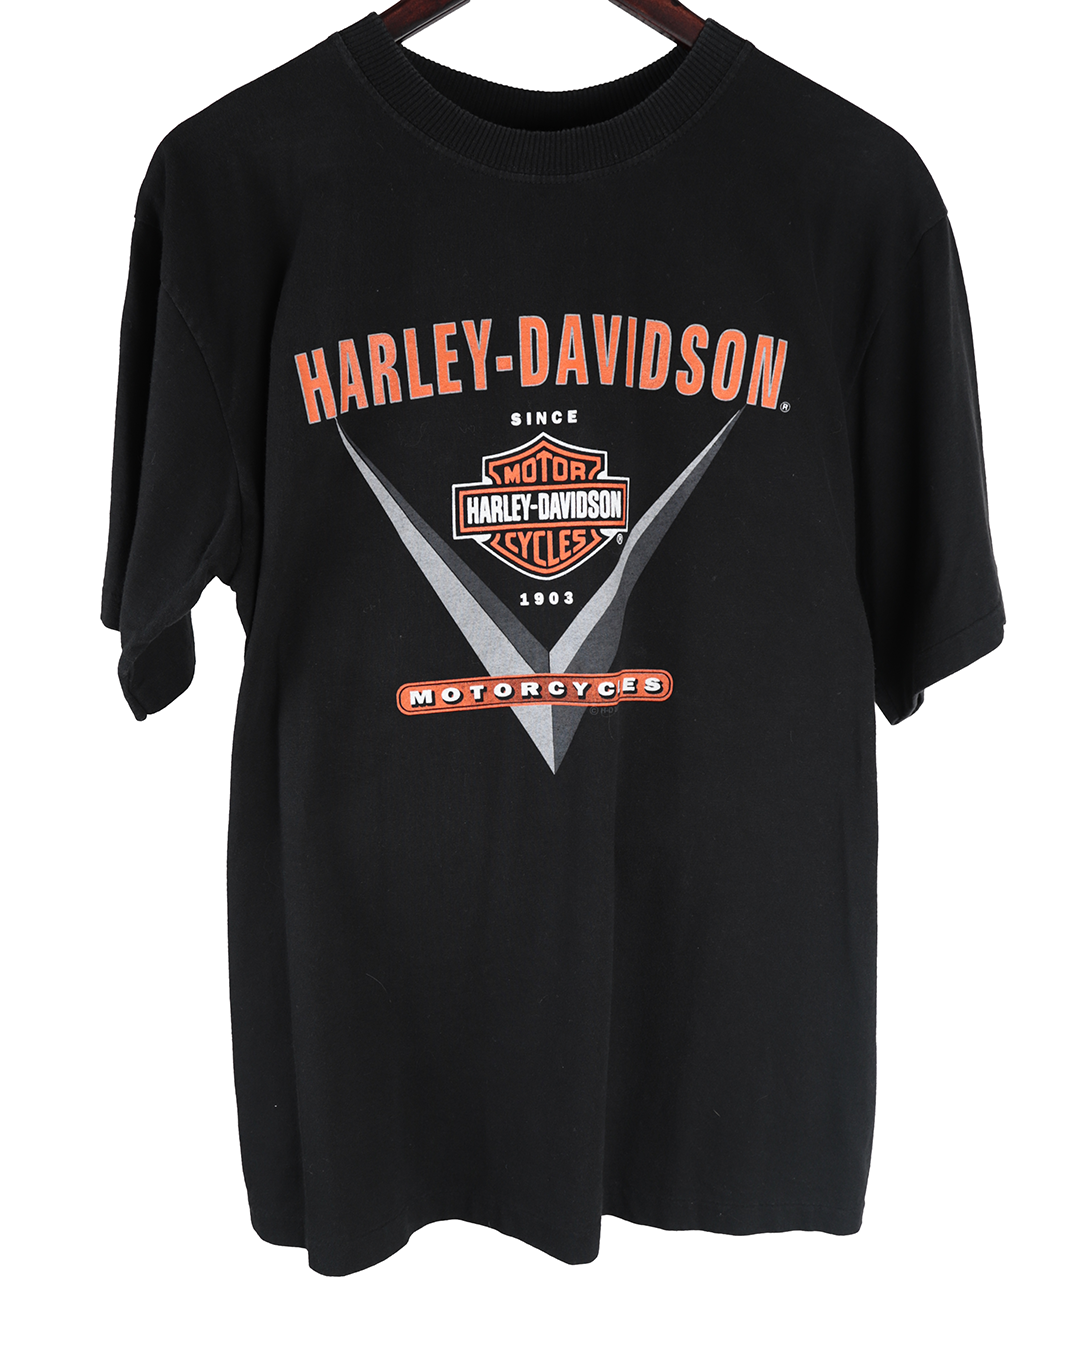 Harley Davidson Tee - "Kelowna, B.C."